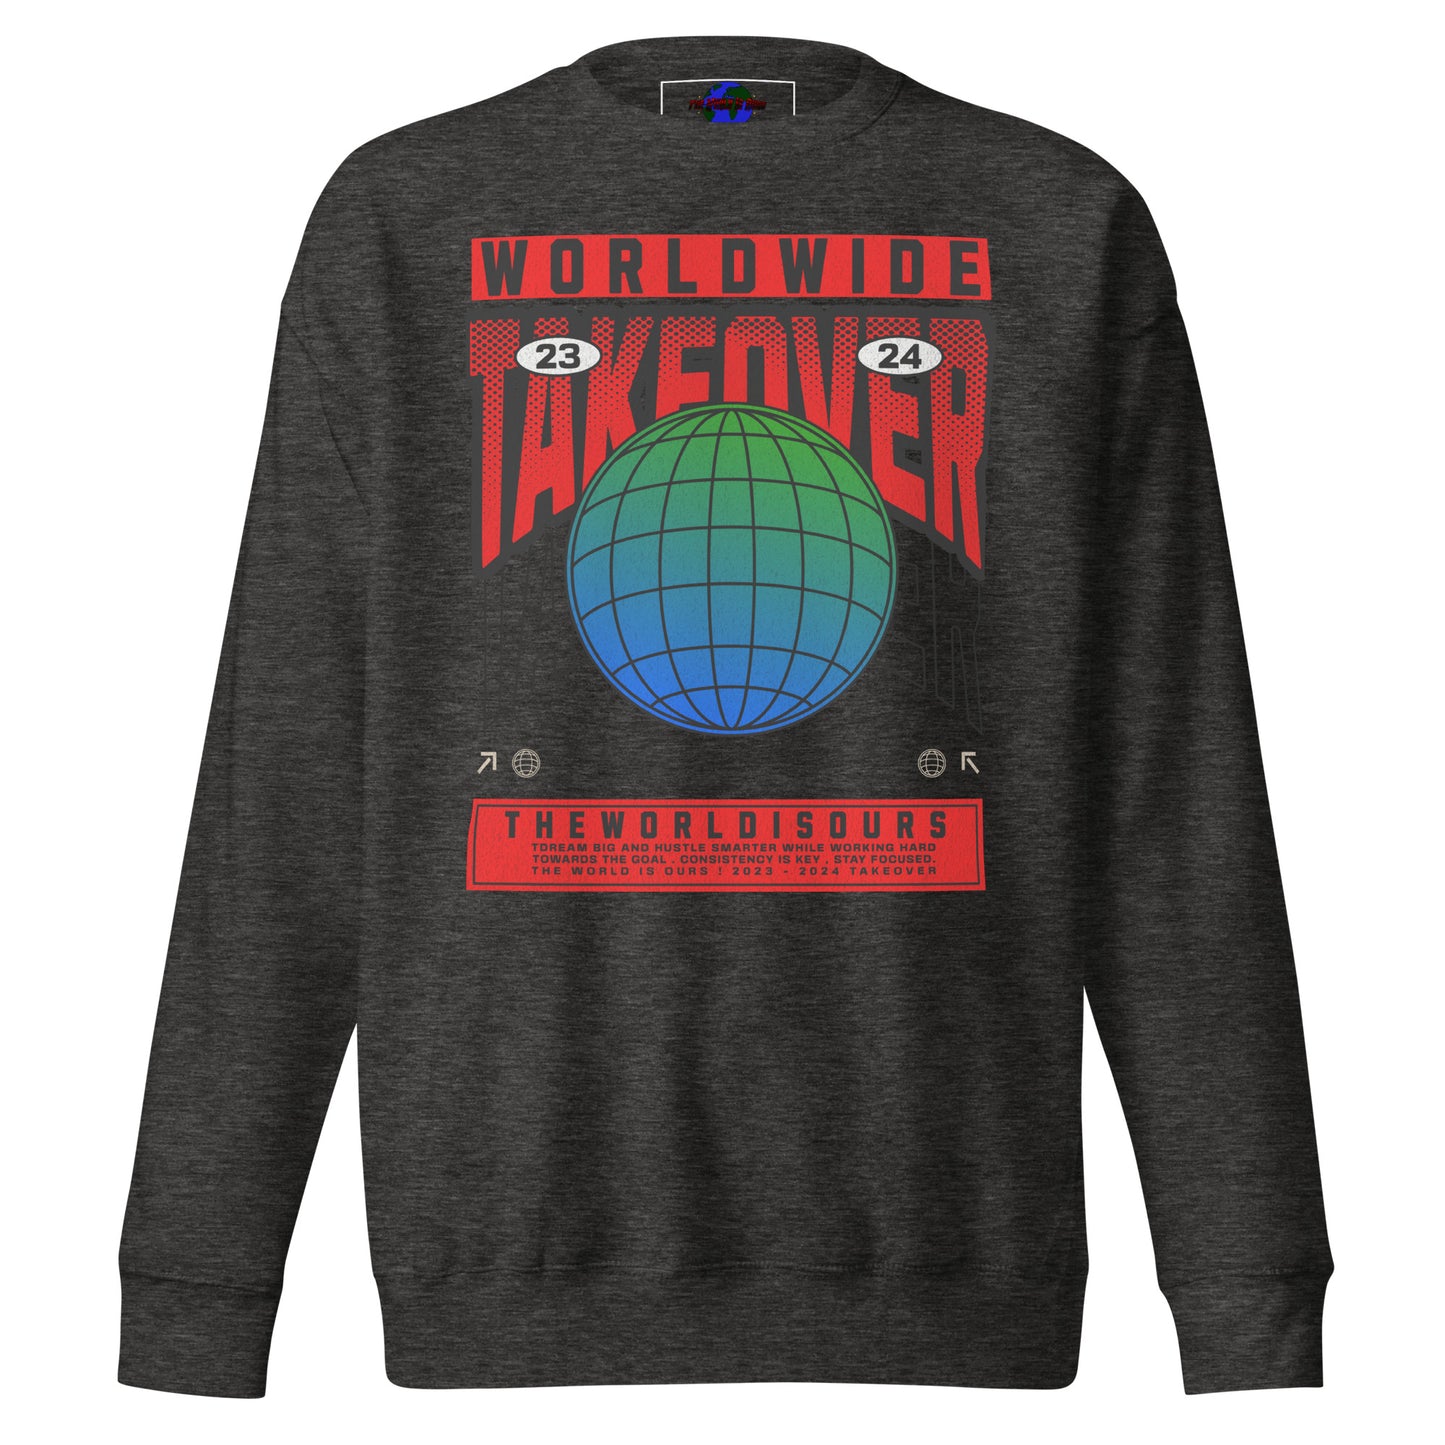 TWIO TAKEOVER Unisex Premium Sweatshirt